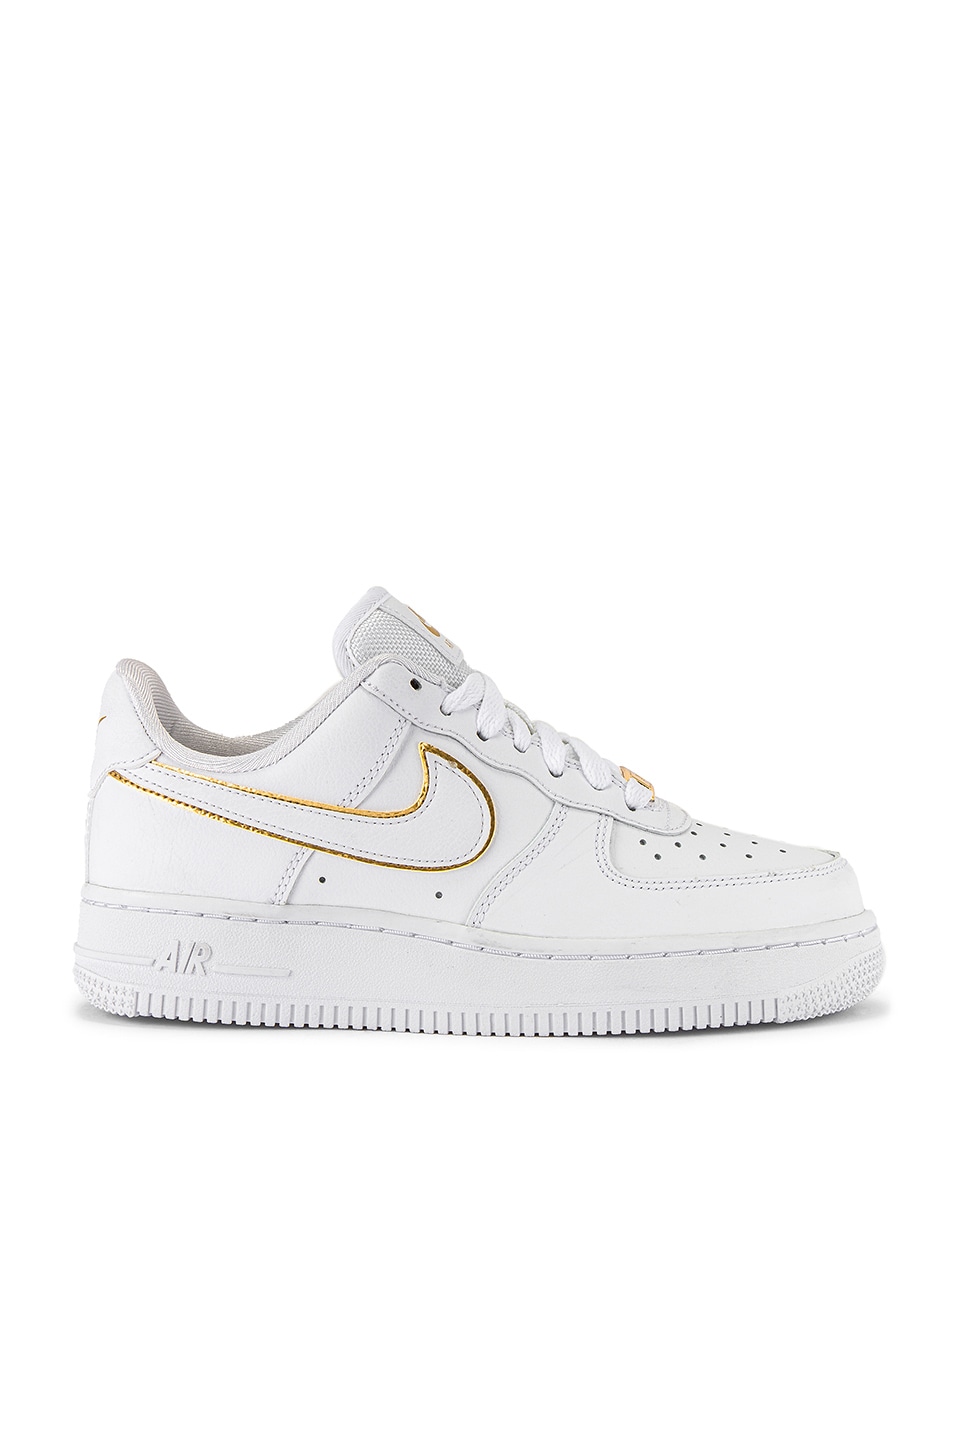 Nike Air Force 1 '07 Sneaker in White & Metallic Gold | REVOLVE